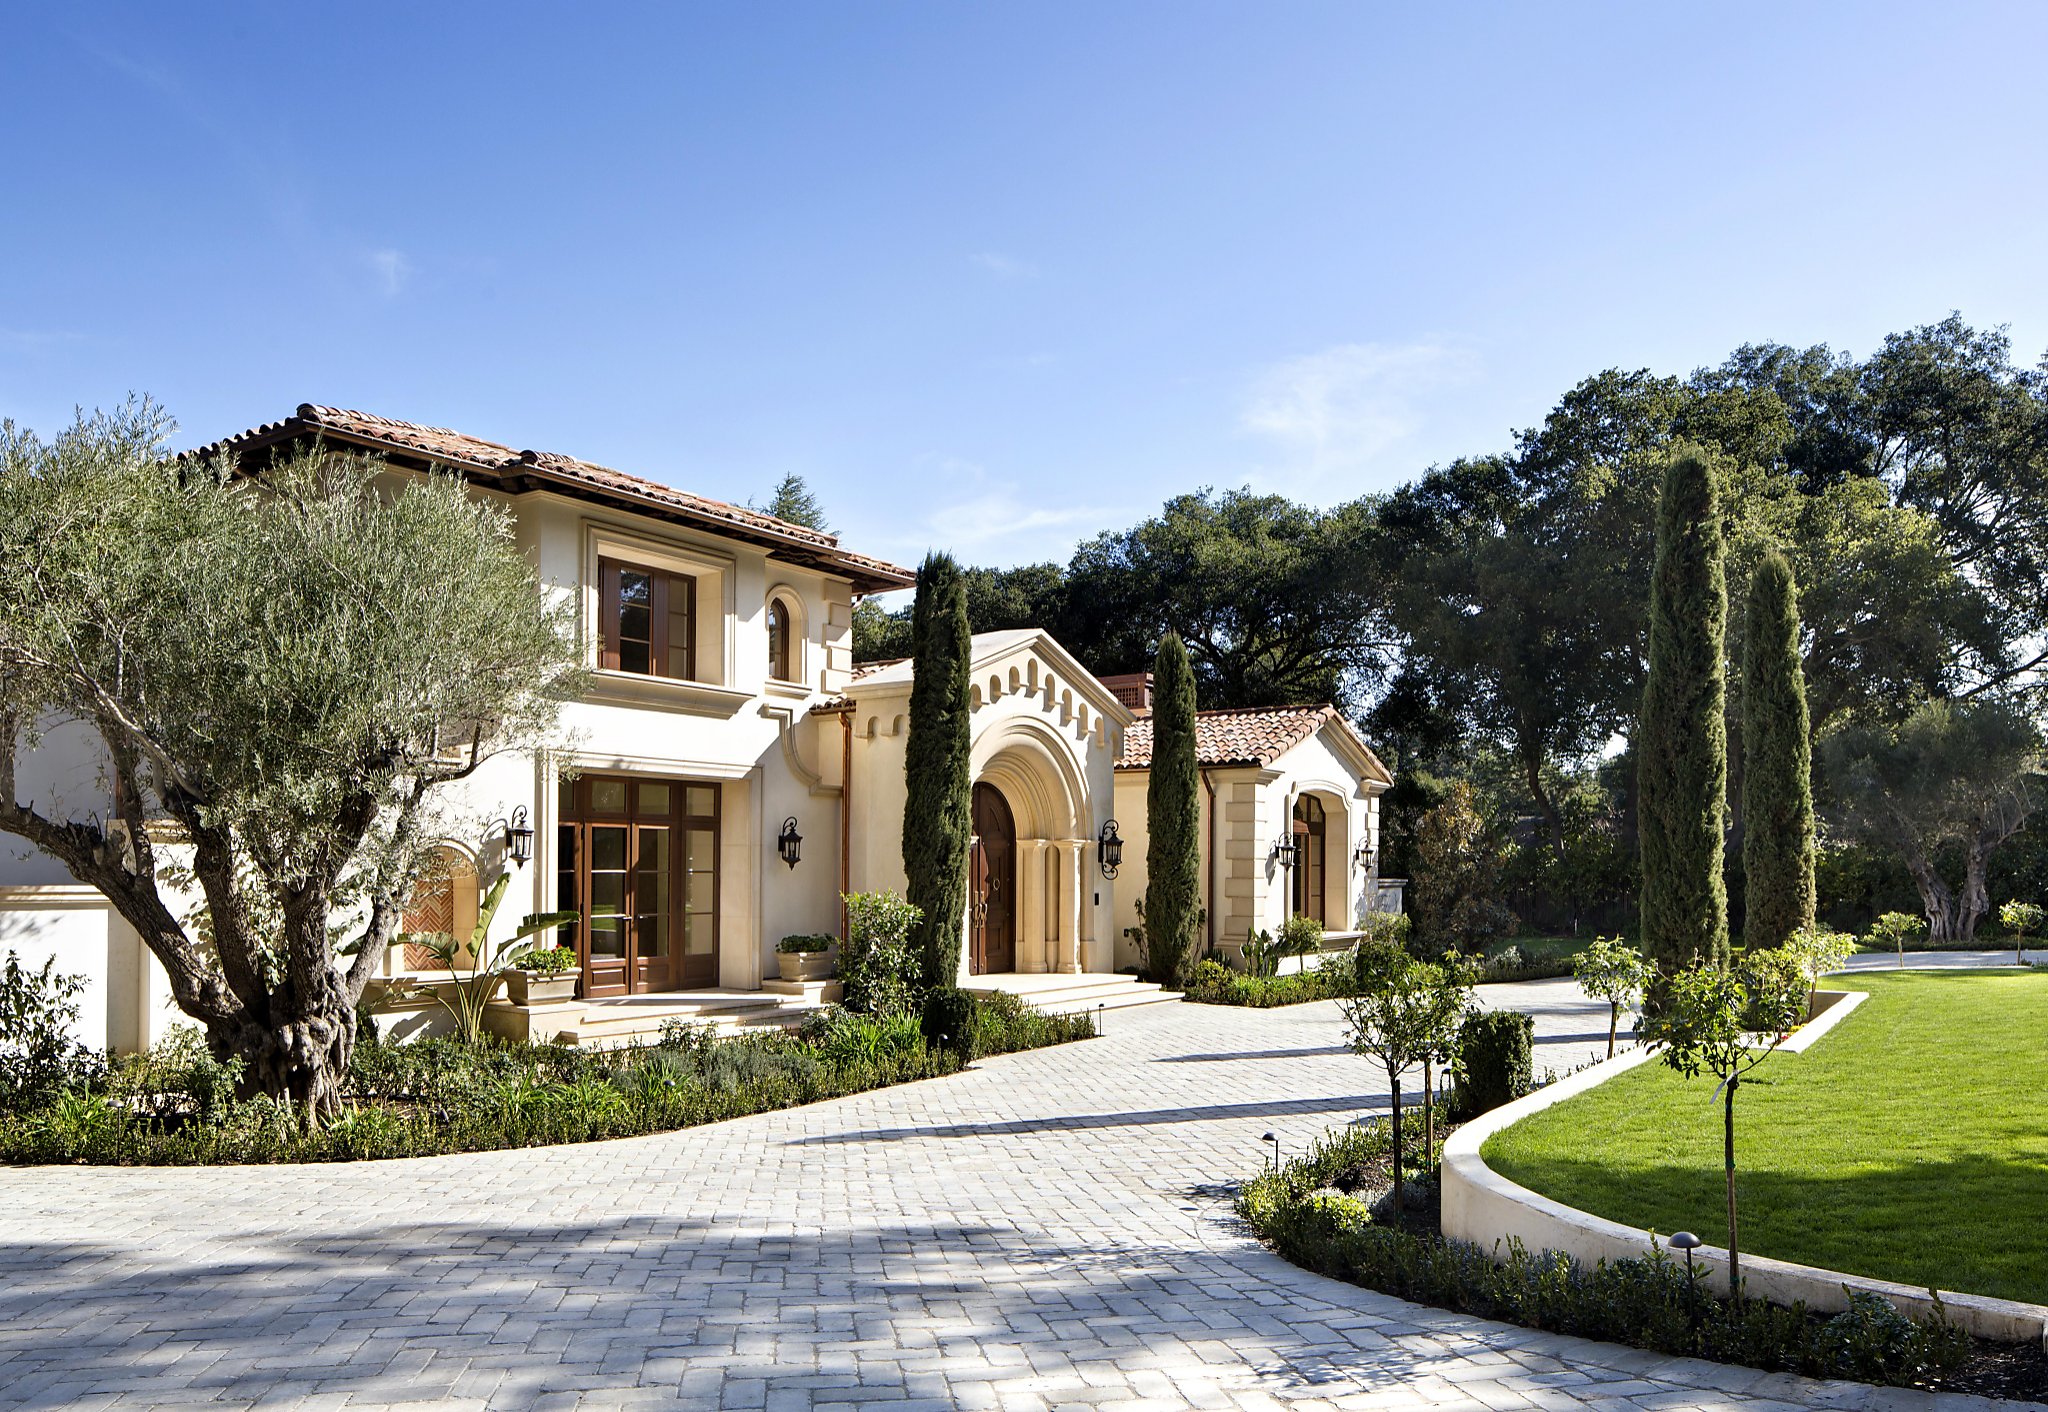 Italian Villa in Atherton offers taste of the past, glimpse of the future - SFGate